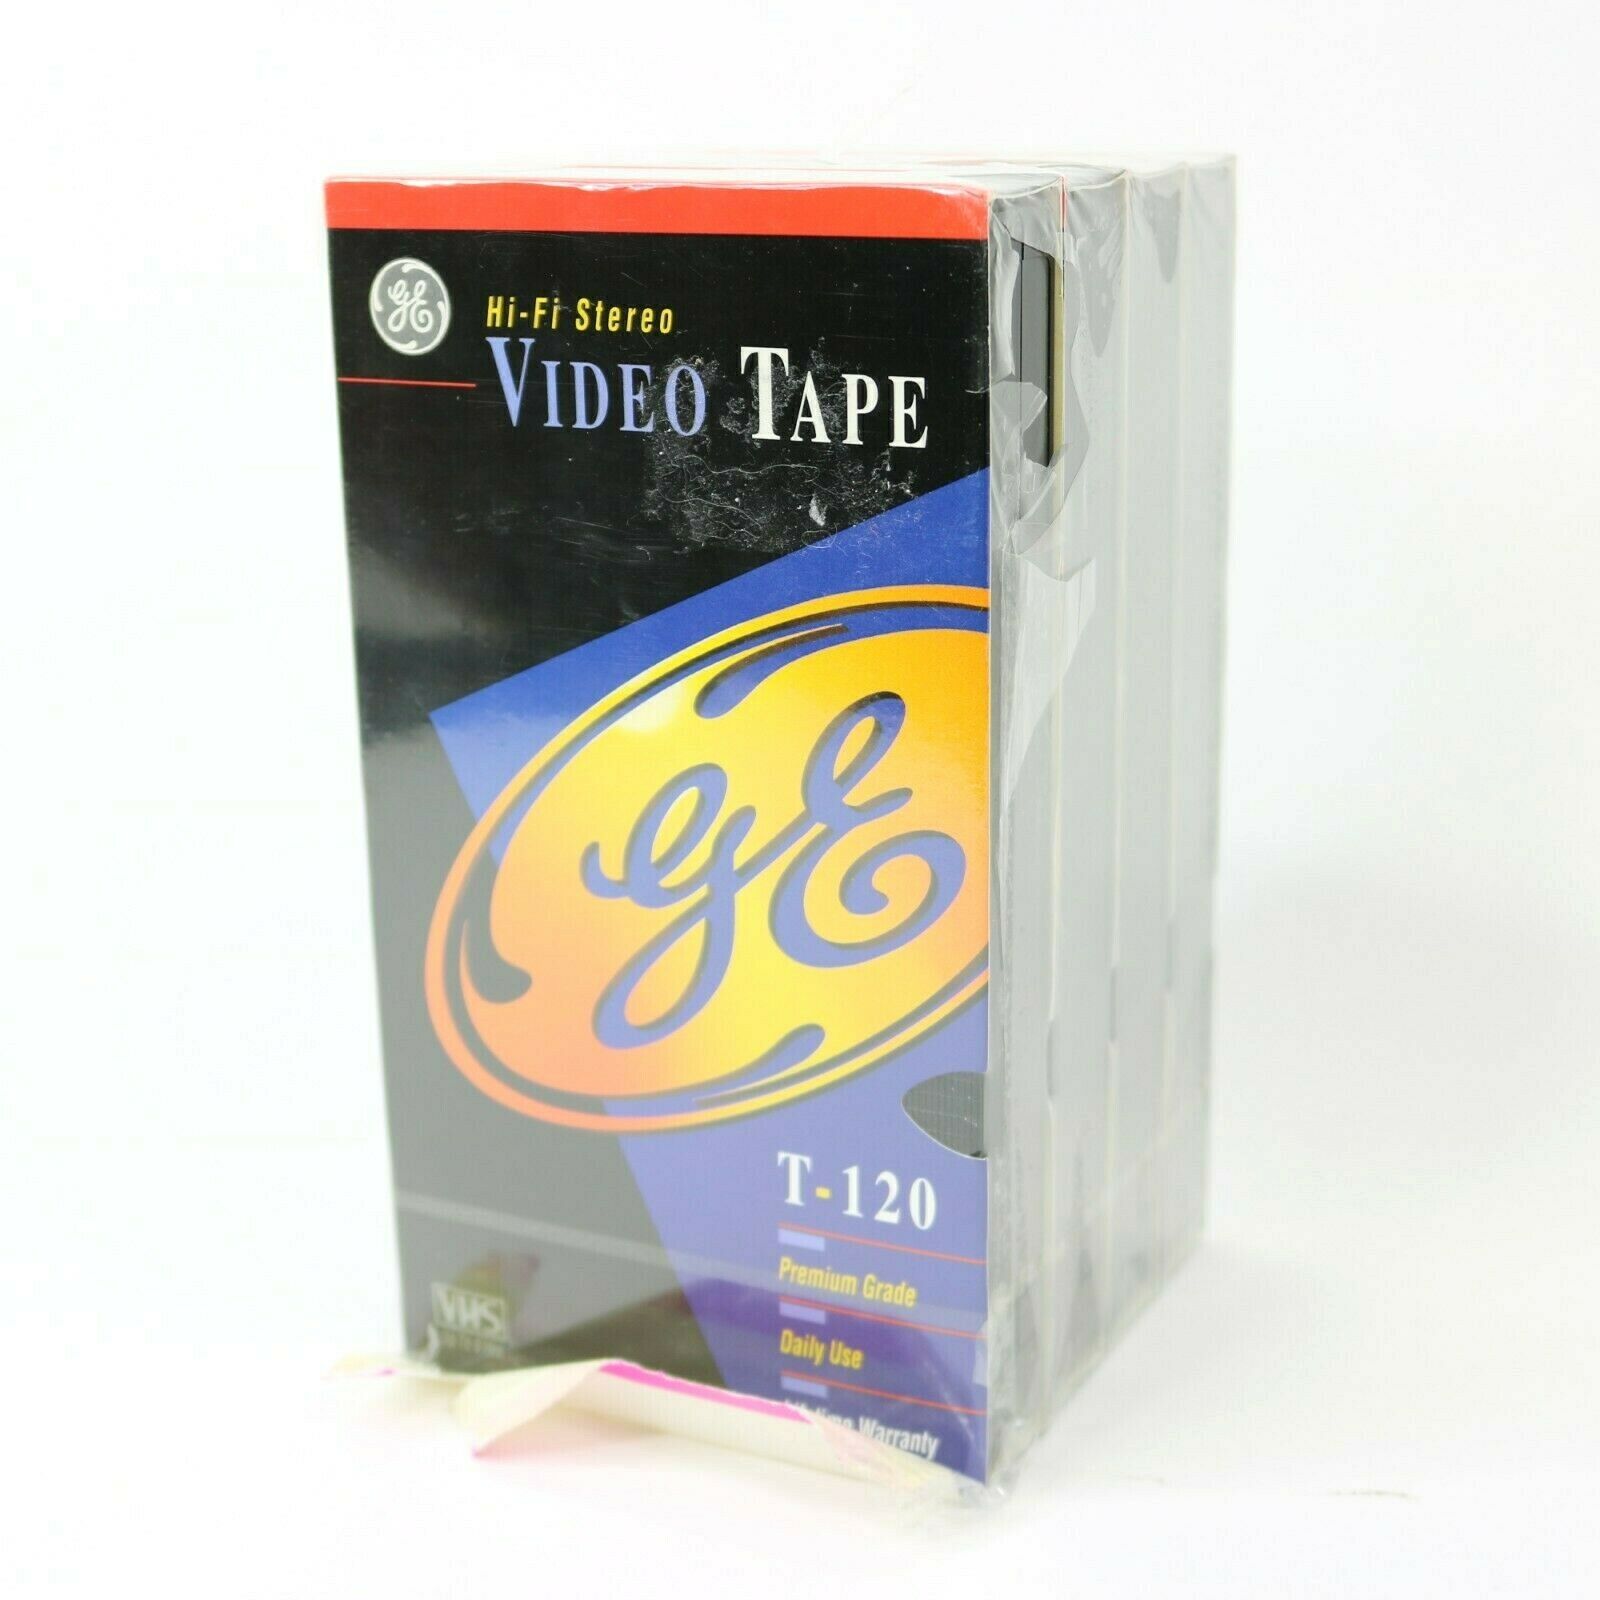 4 Blank Vhs Tapes Ge T-120 Premium Grade Hi Fi Stereo 6 Hours Video Tape Lot Set